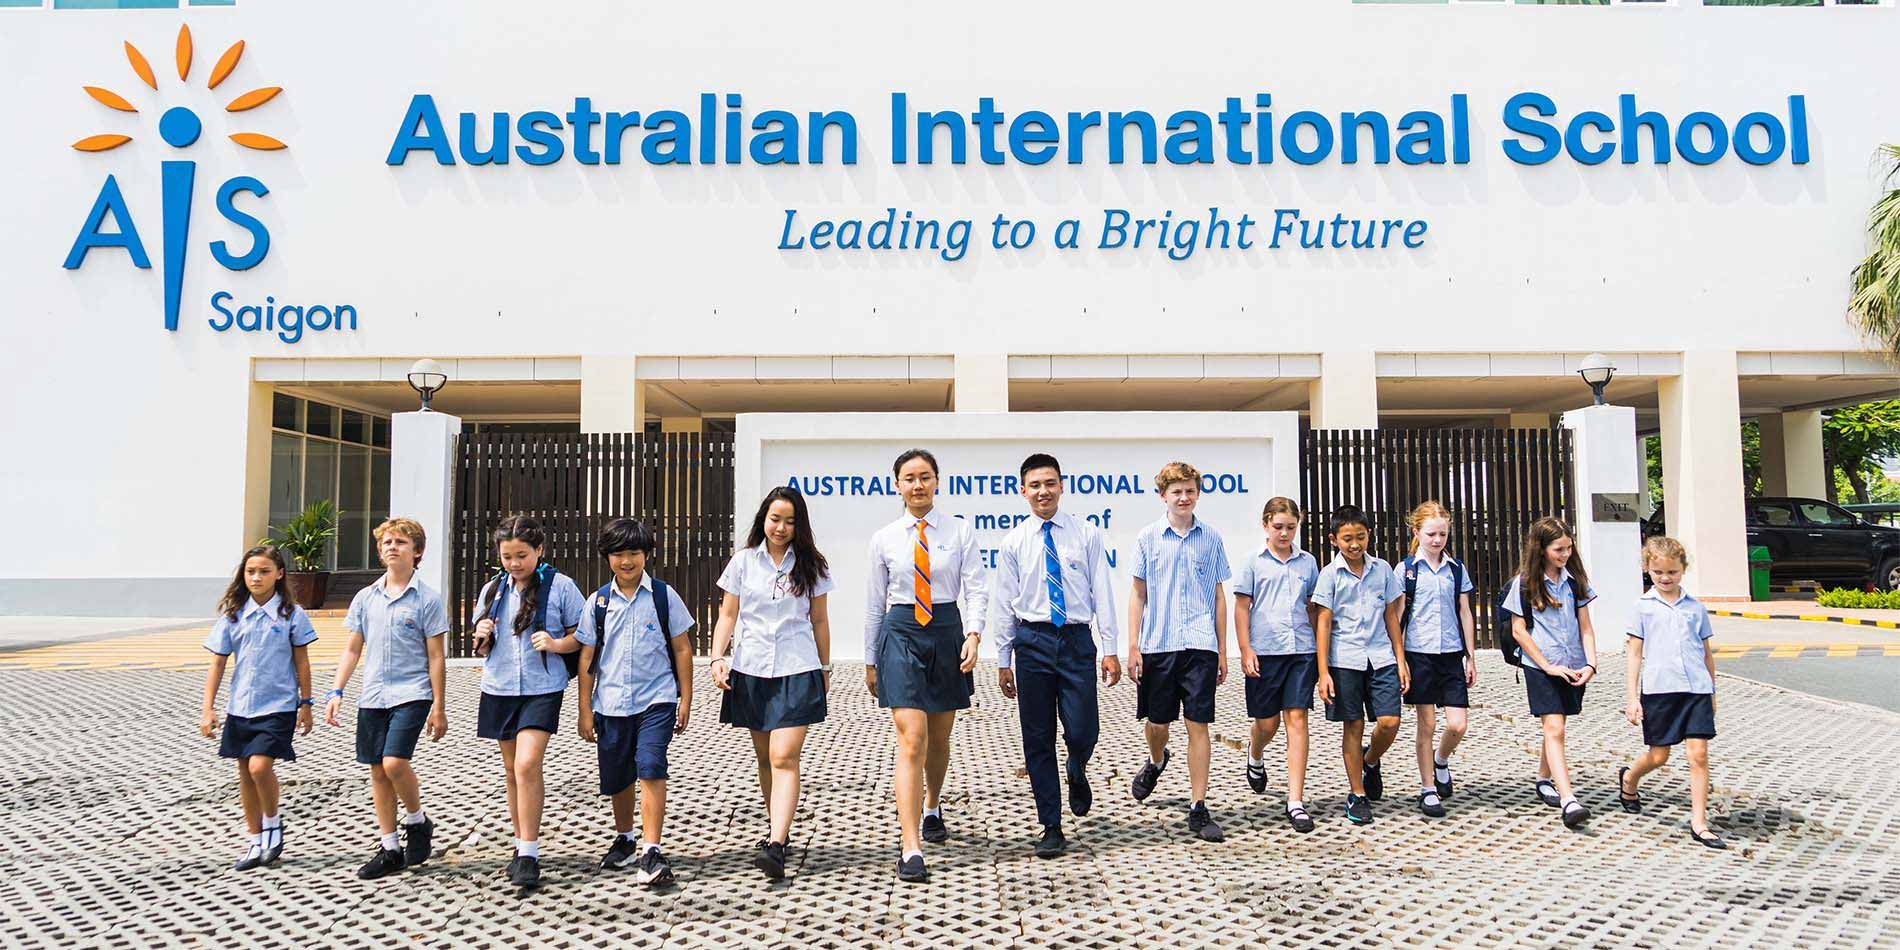  Australian-International-School-photo-1 Australian International School